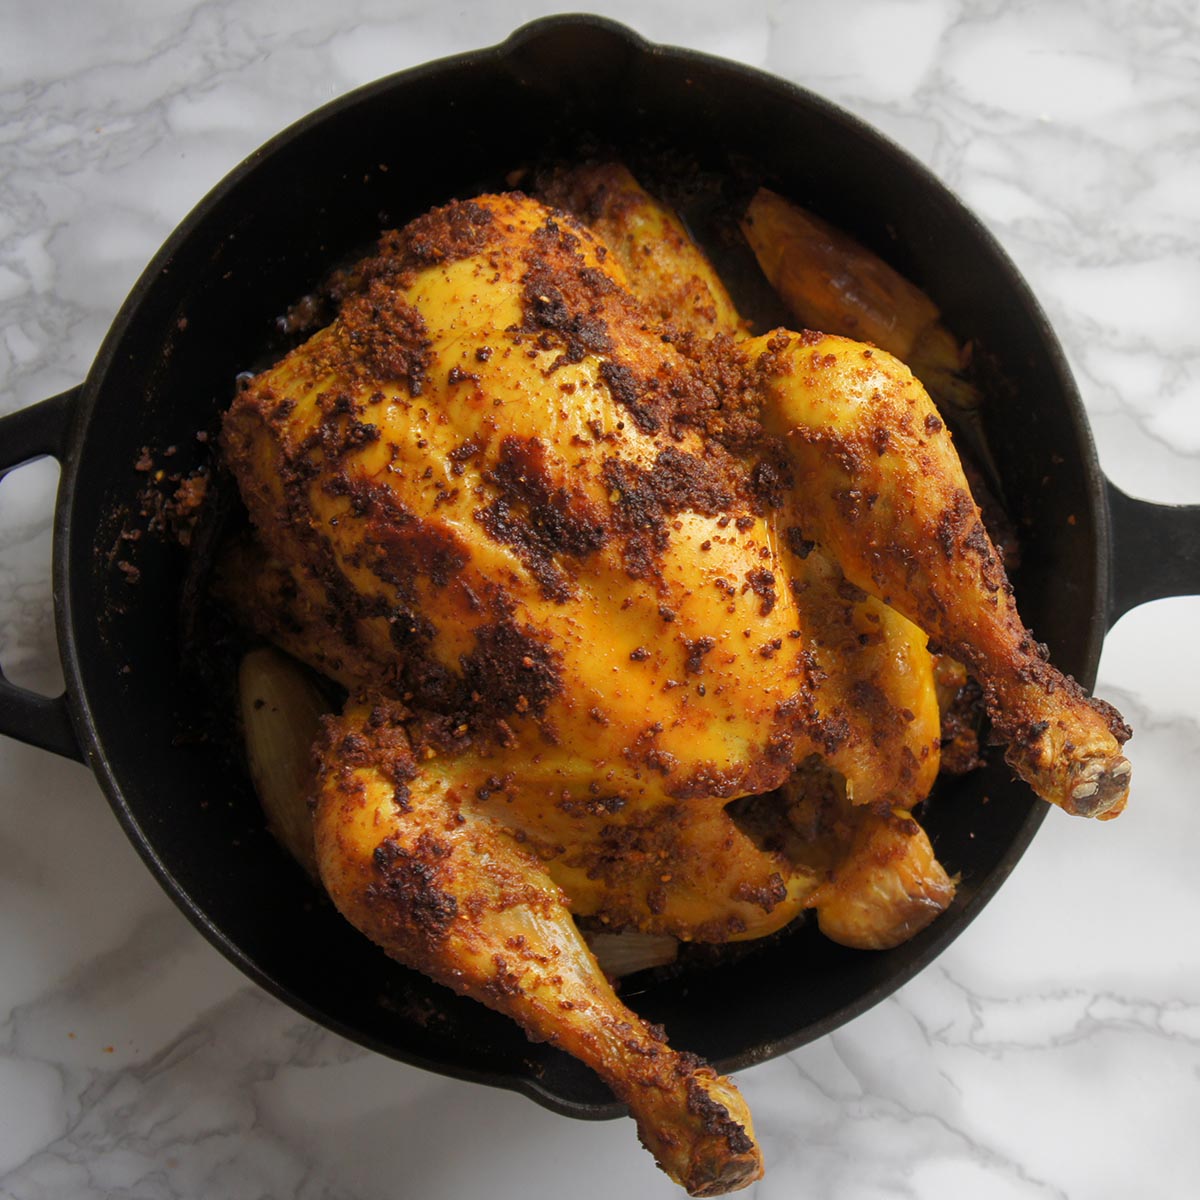 Roast chicken in a cast iron skillet